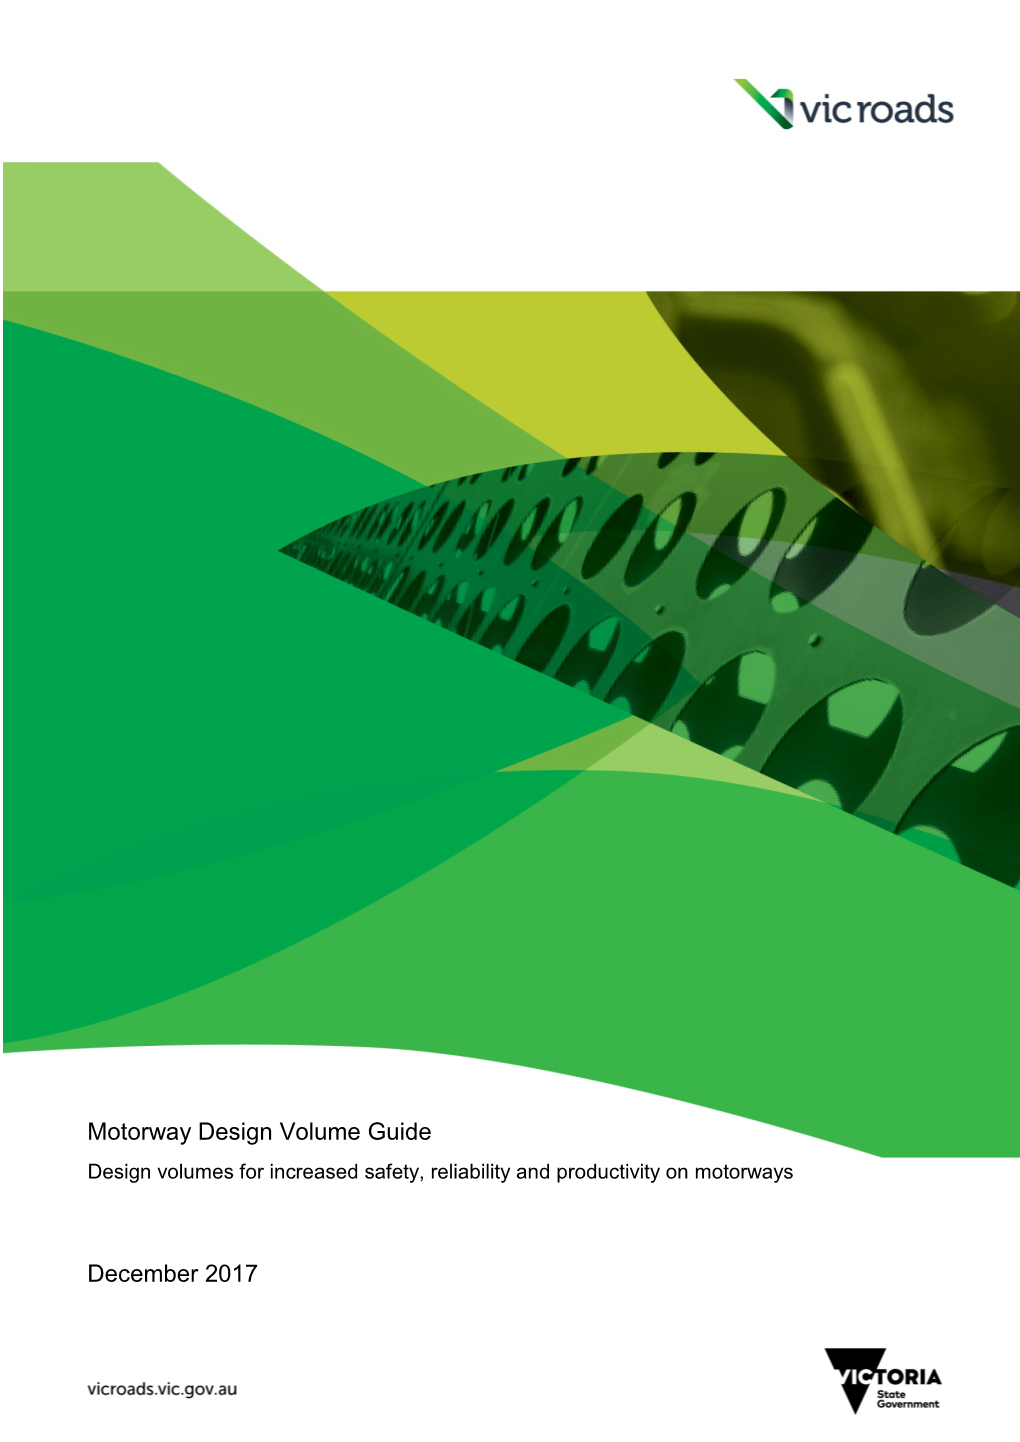 Motorway Design Volume Guide December 2017